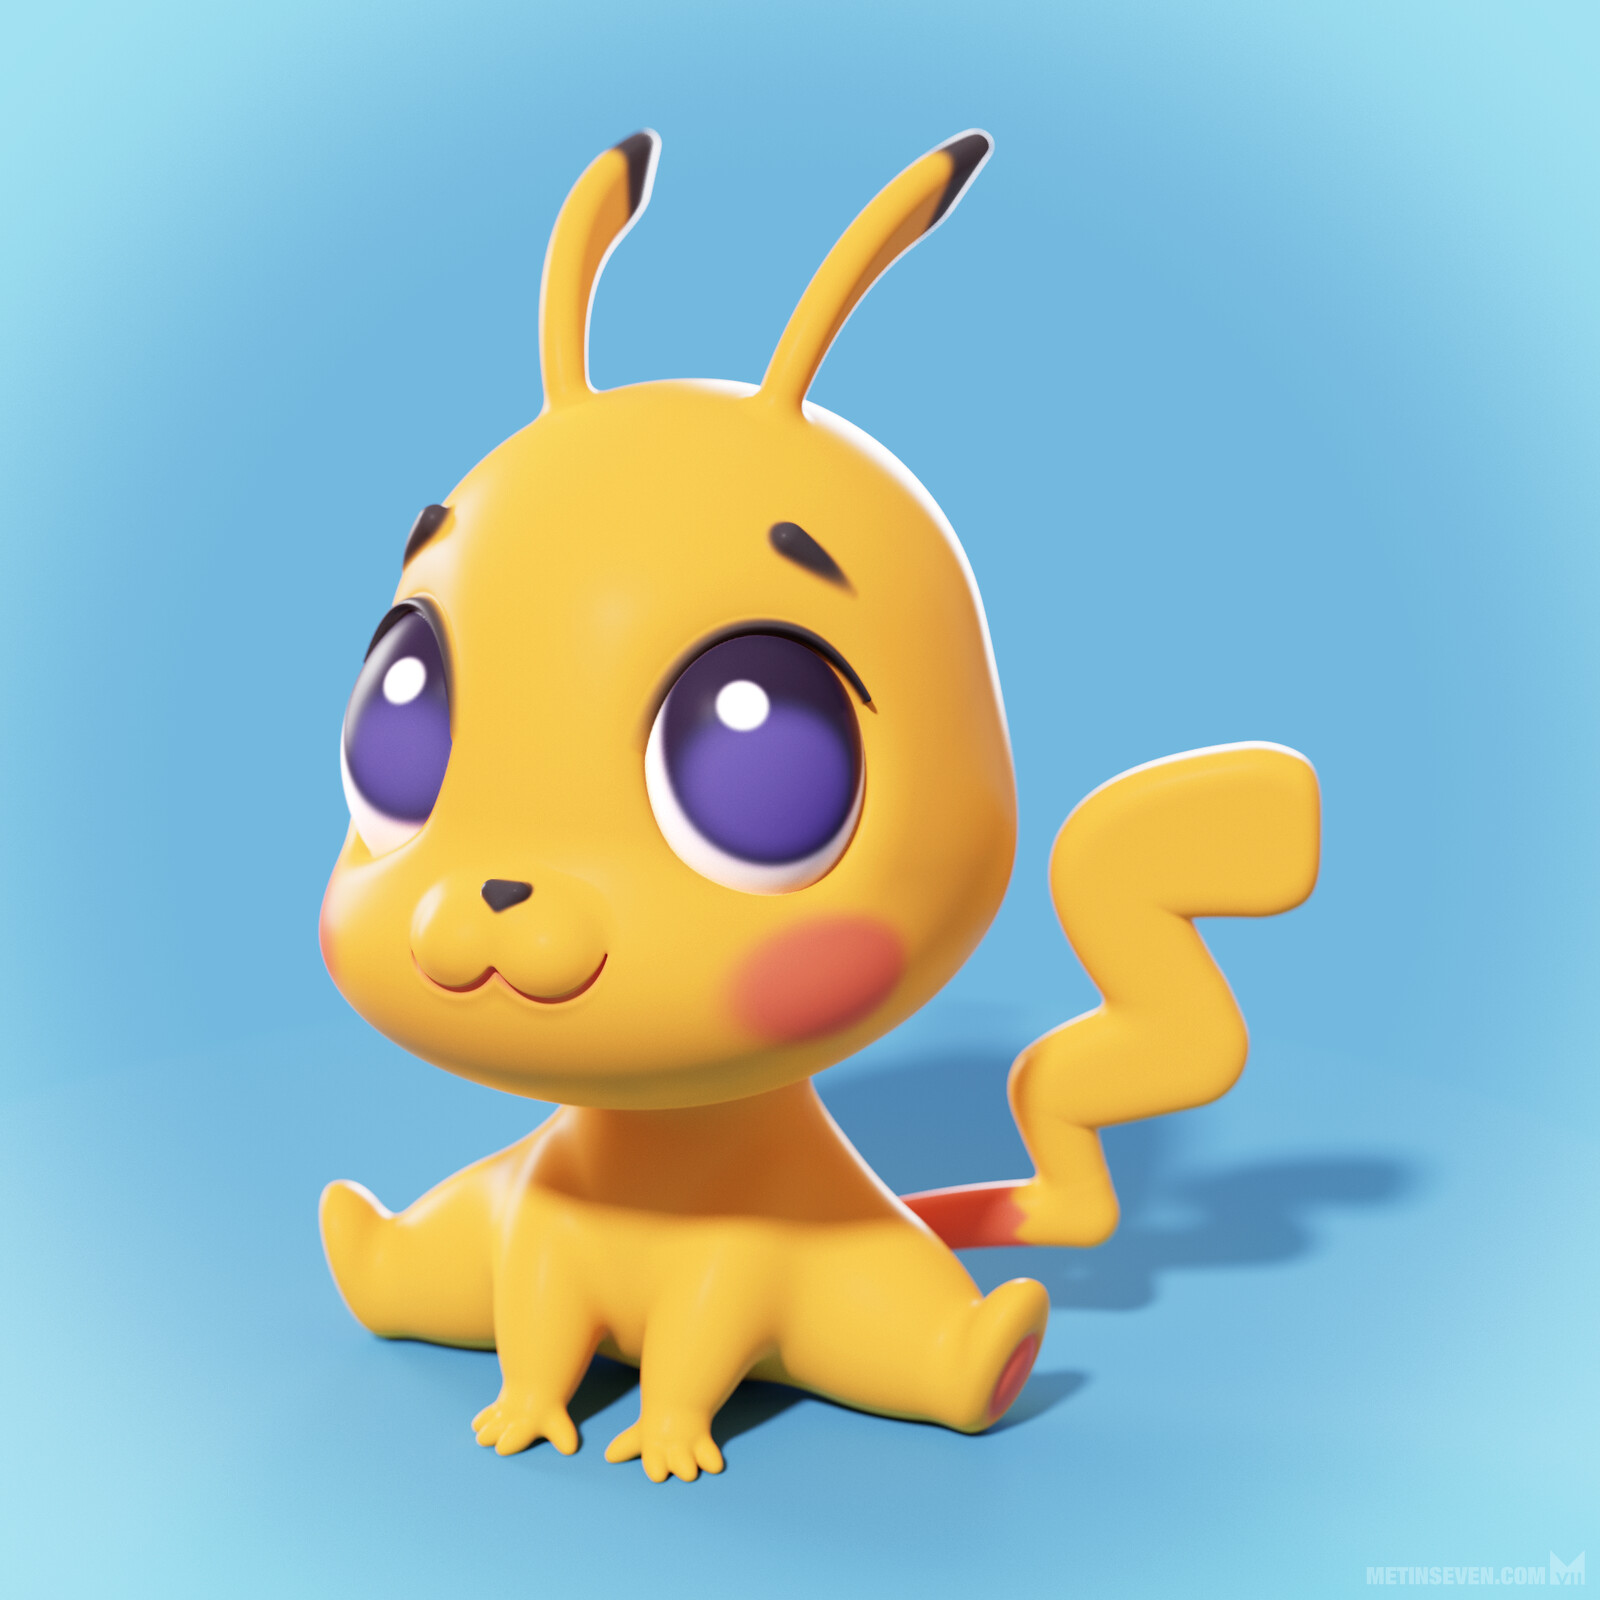 cute baby pikachu